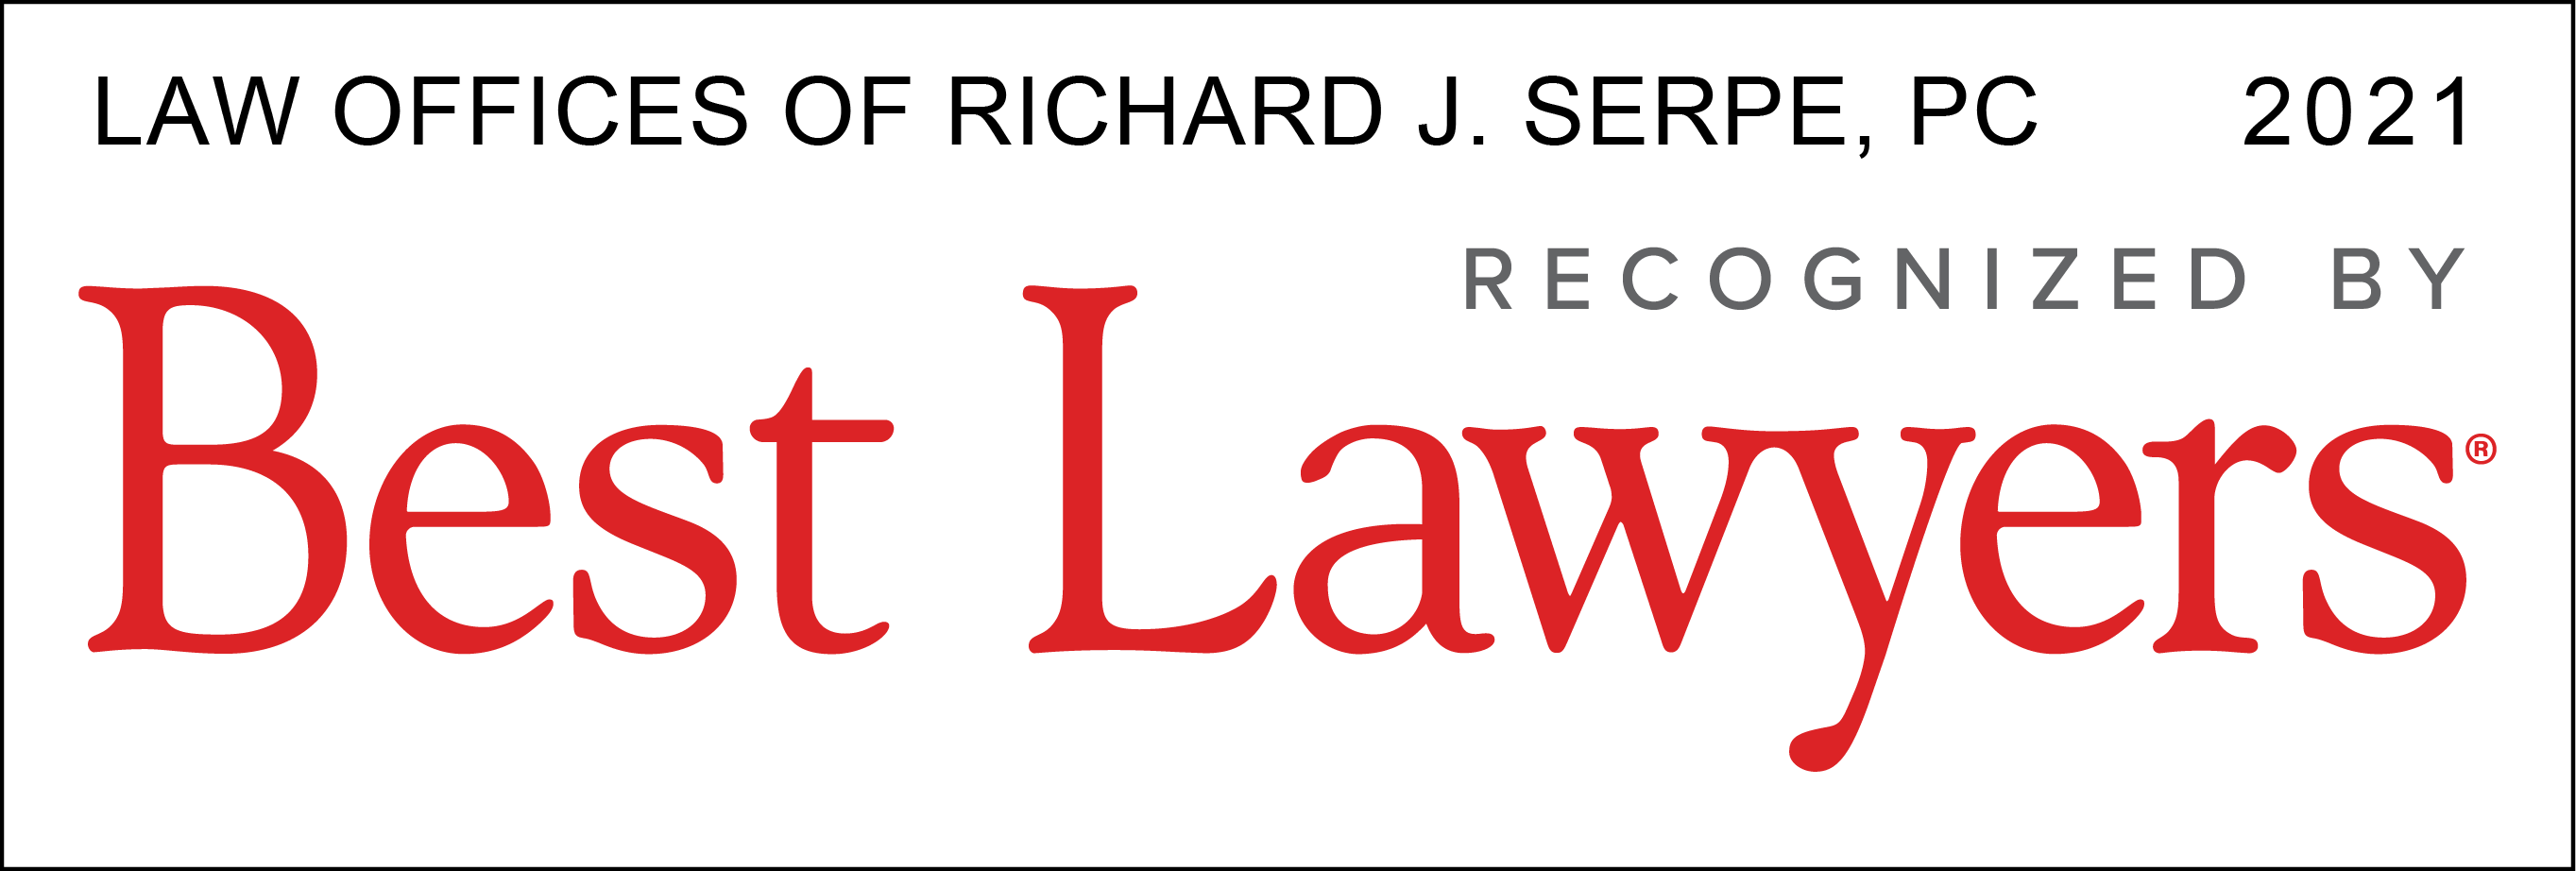 Richard Serpe recognized by Best Lawyers, Norfolk personal injury